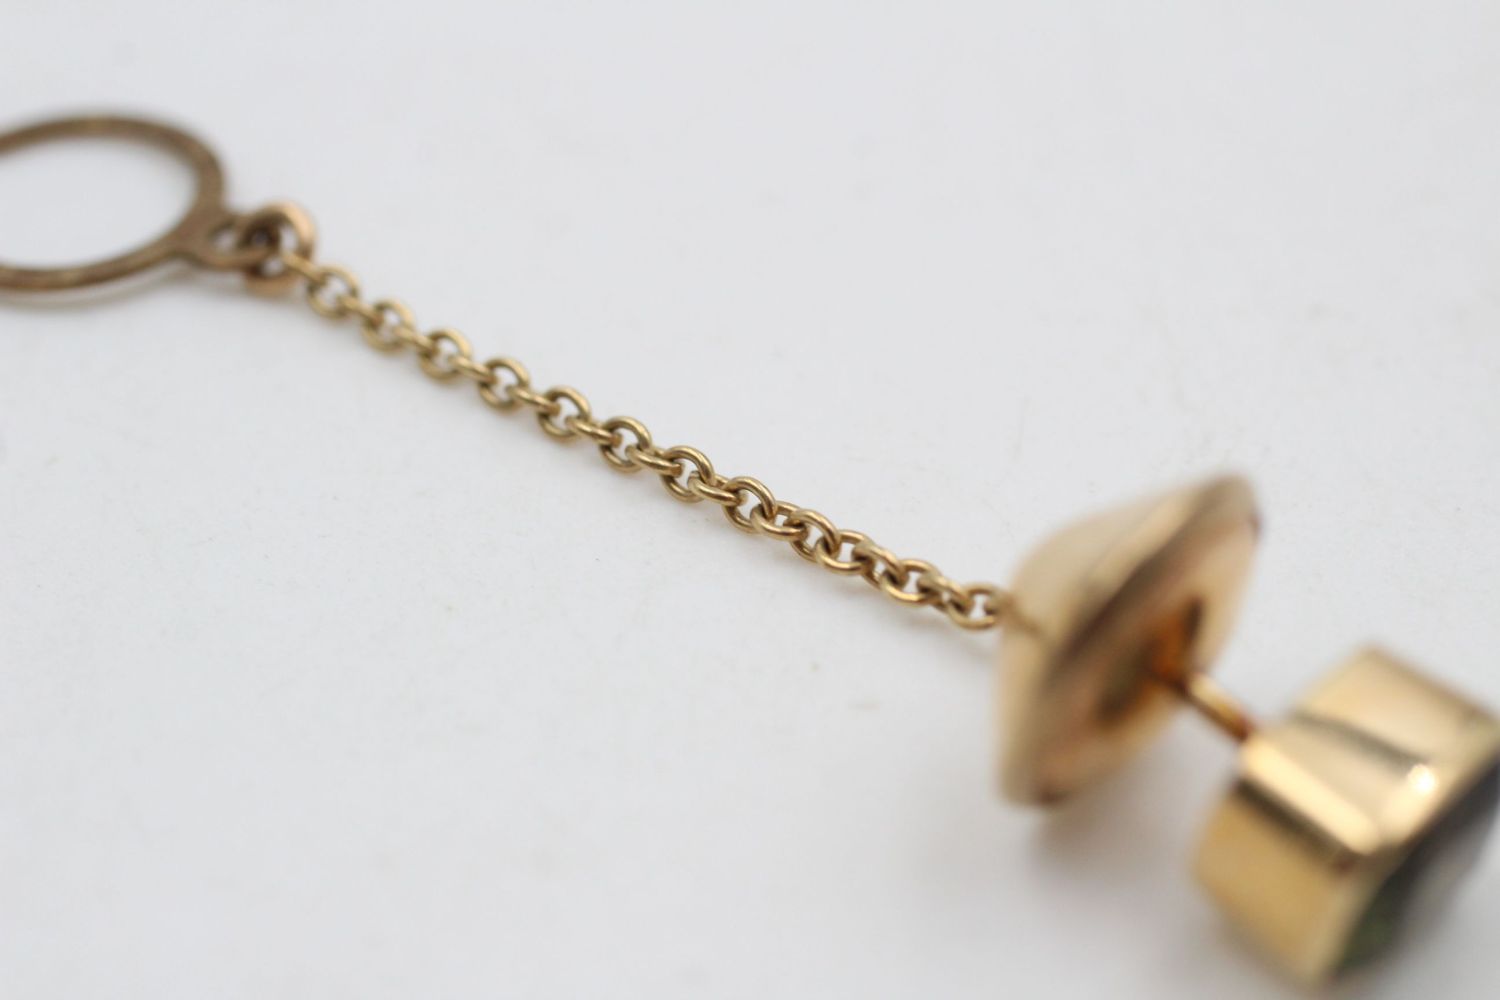 9ct gold moldavite glass tie pin 2.8 grams gross - Image 3 of 5